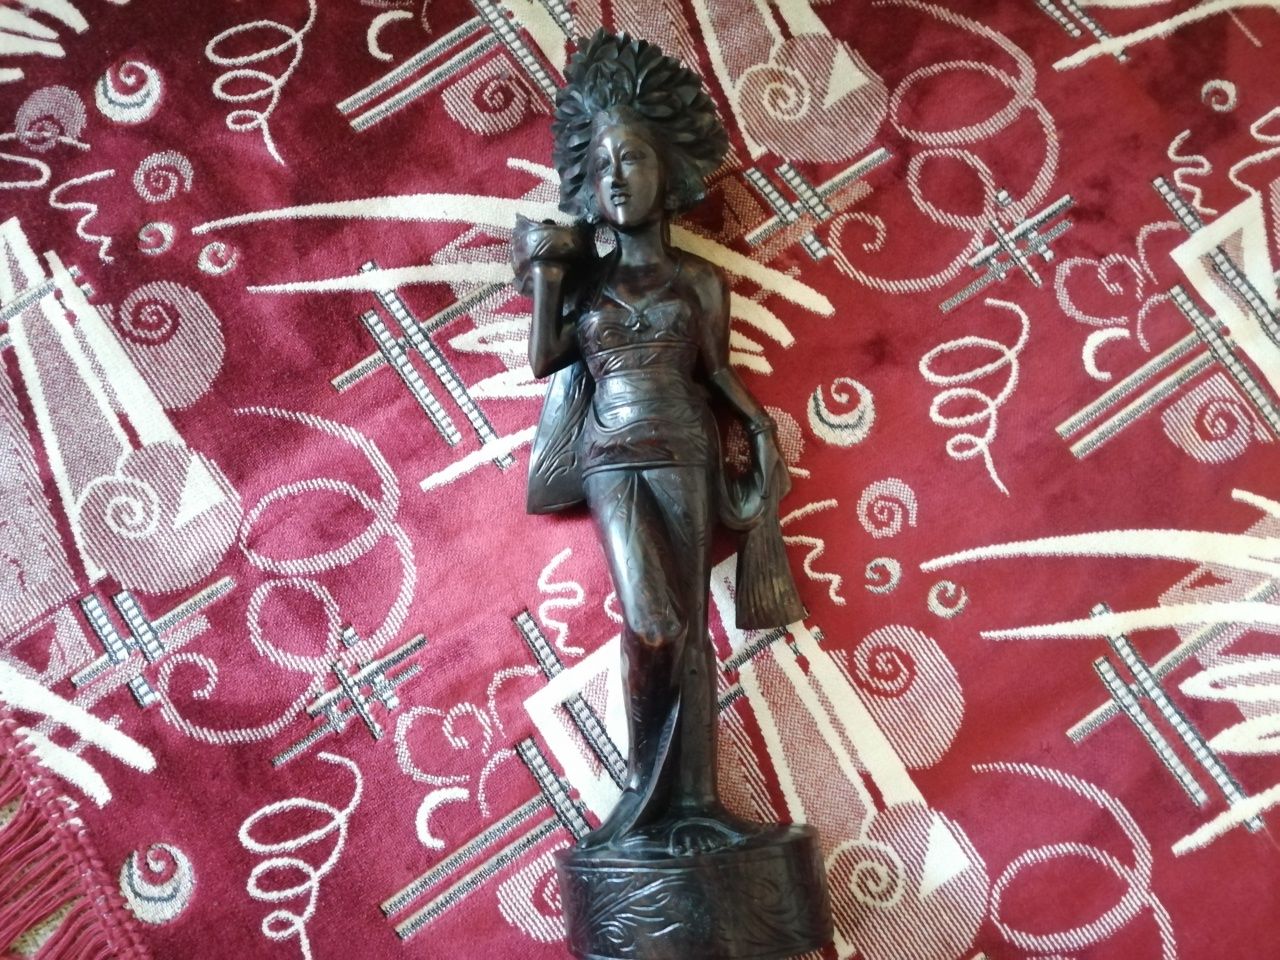 Statueta sculptata - abanos  Danssatoare - Bali (figurina suvenir